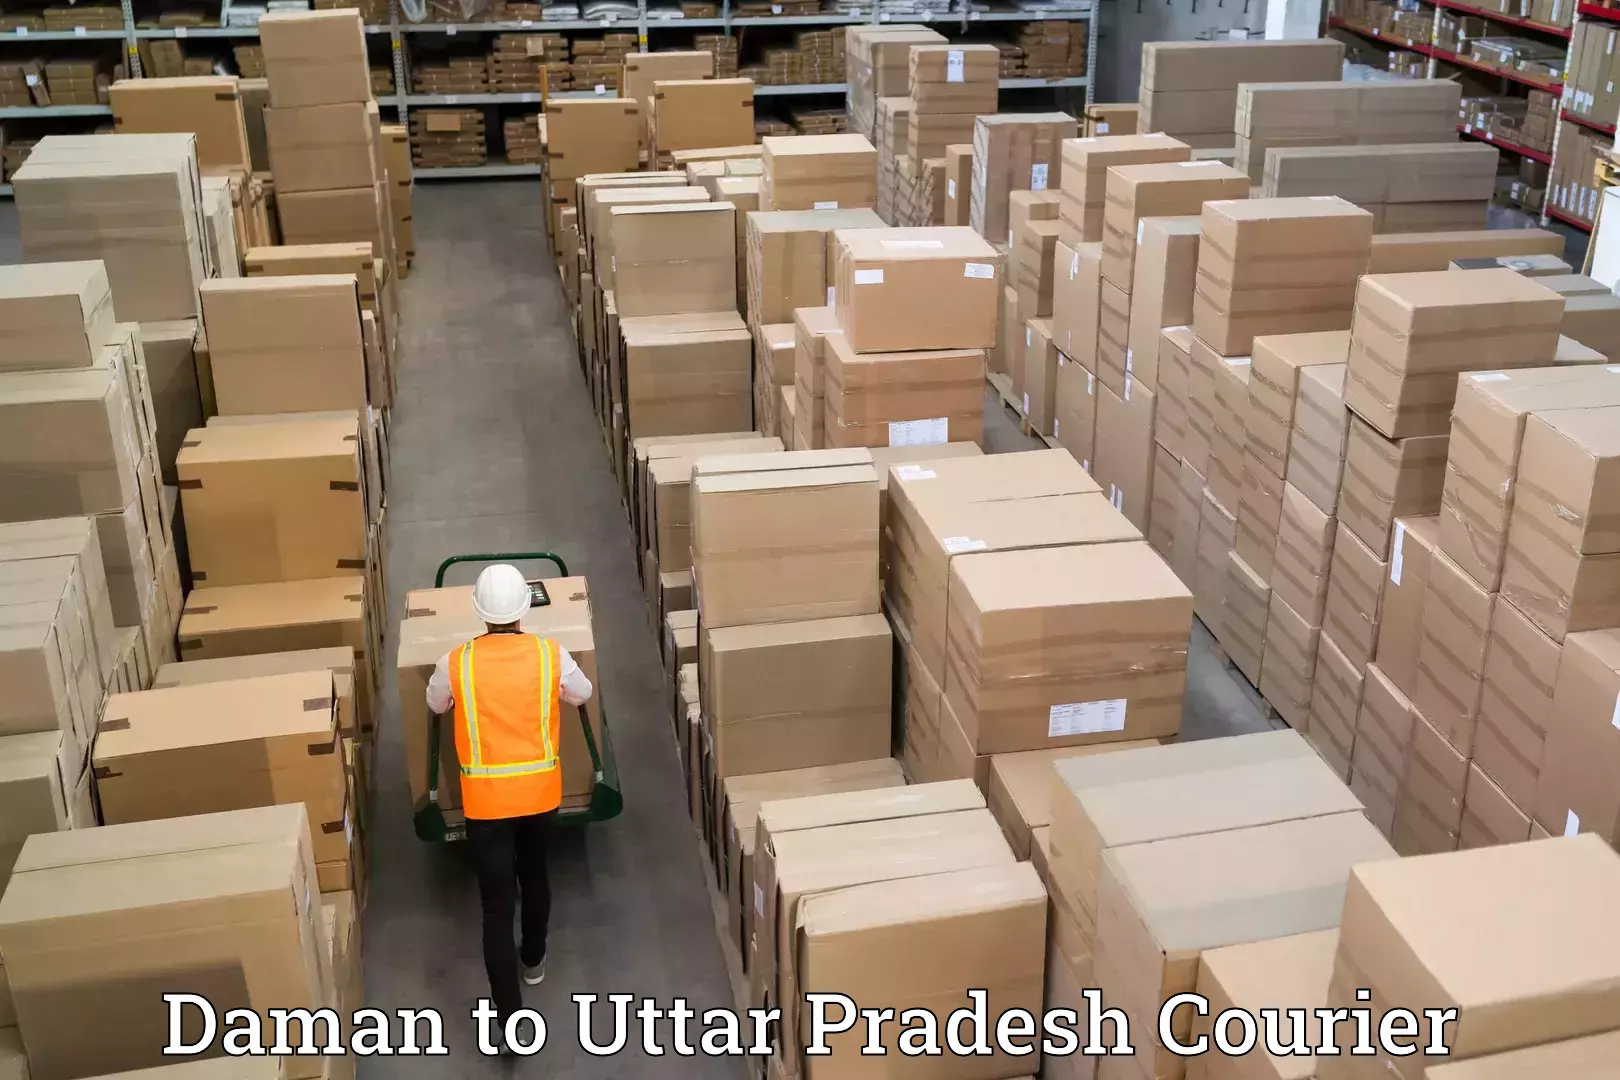 Professional moving company Daman to Uttar Pradesh